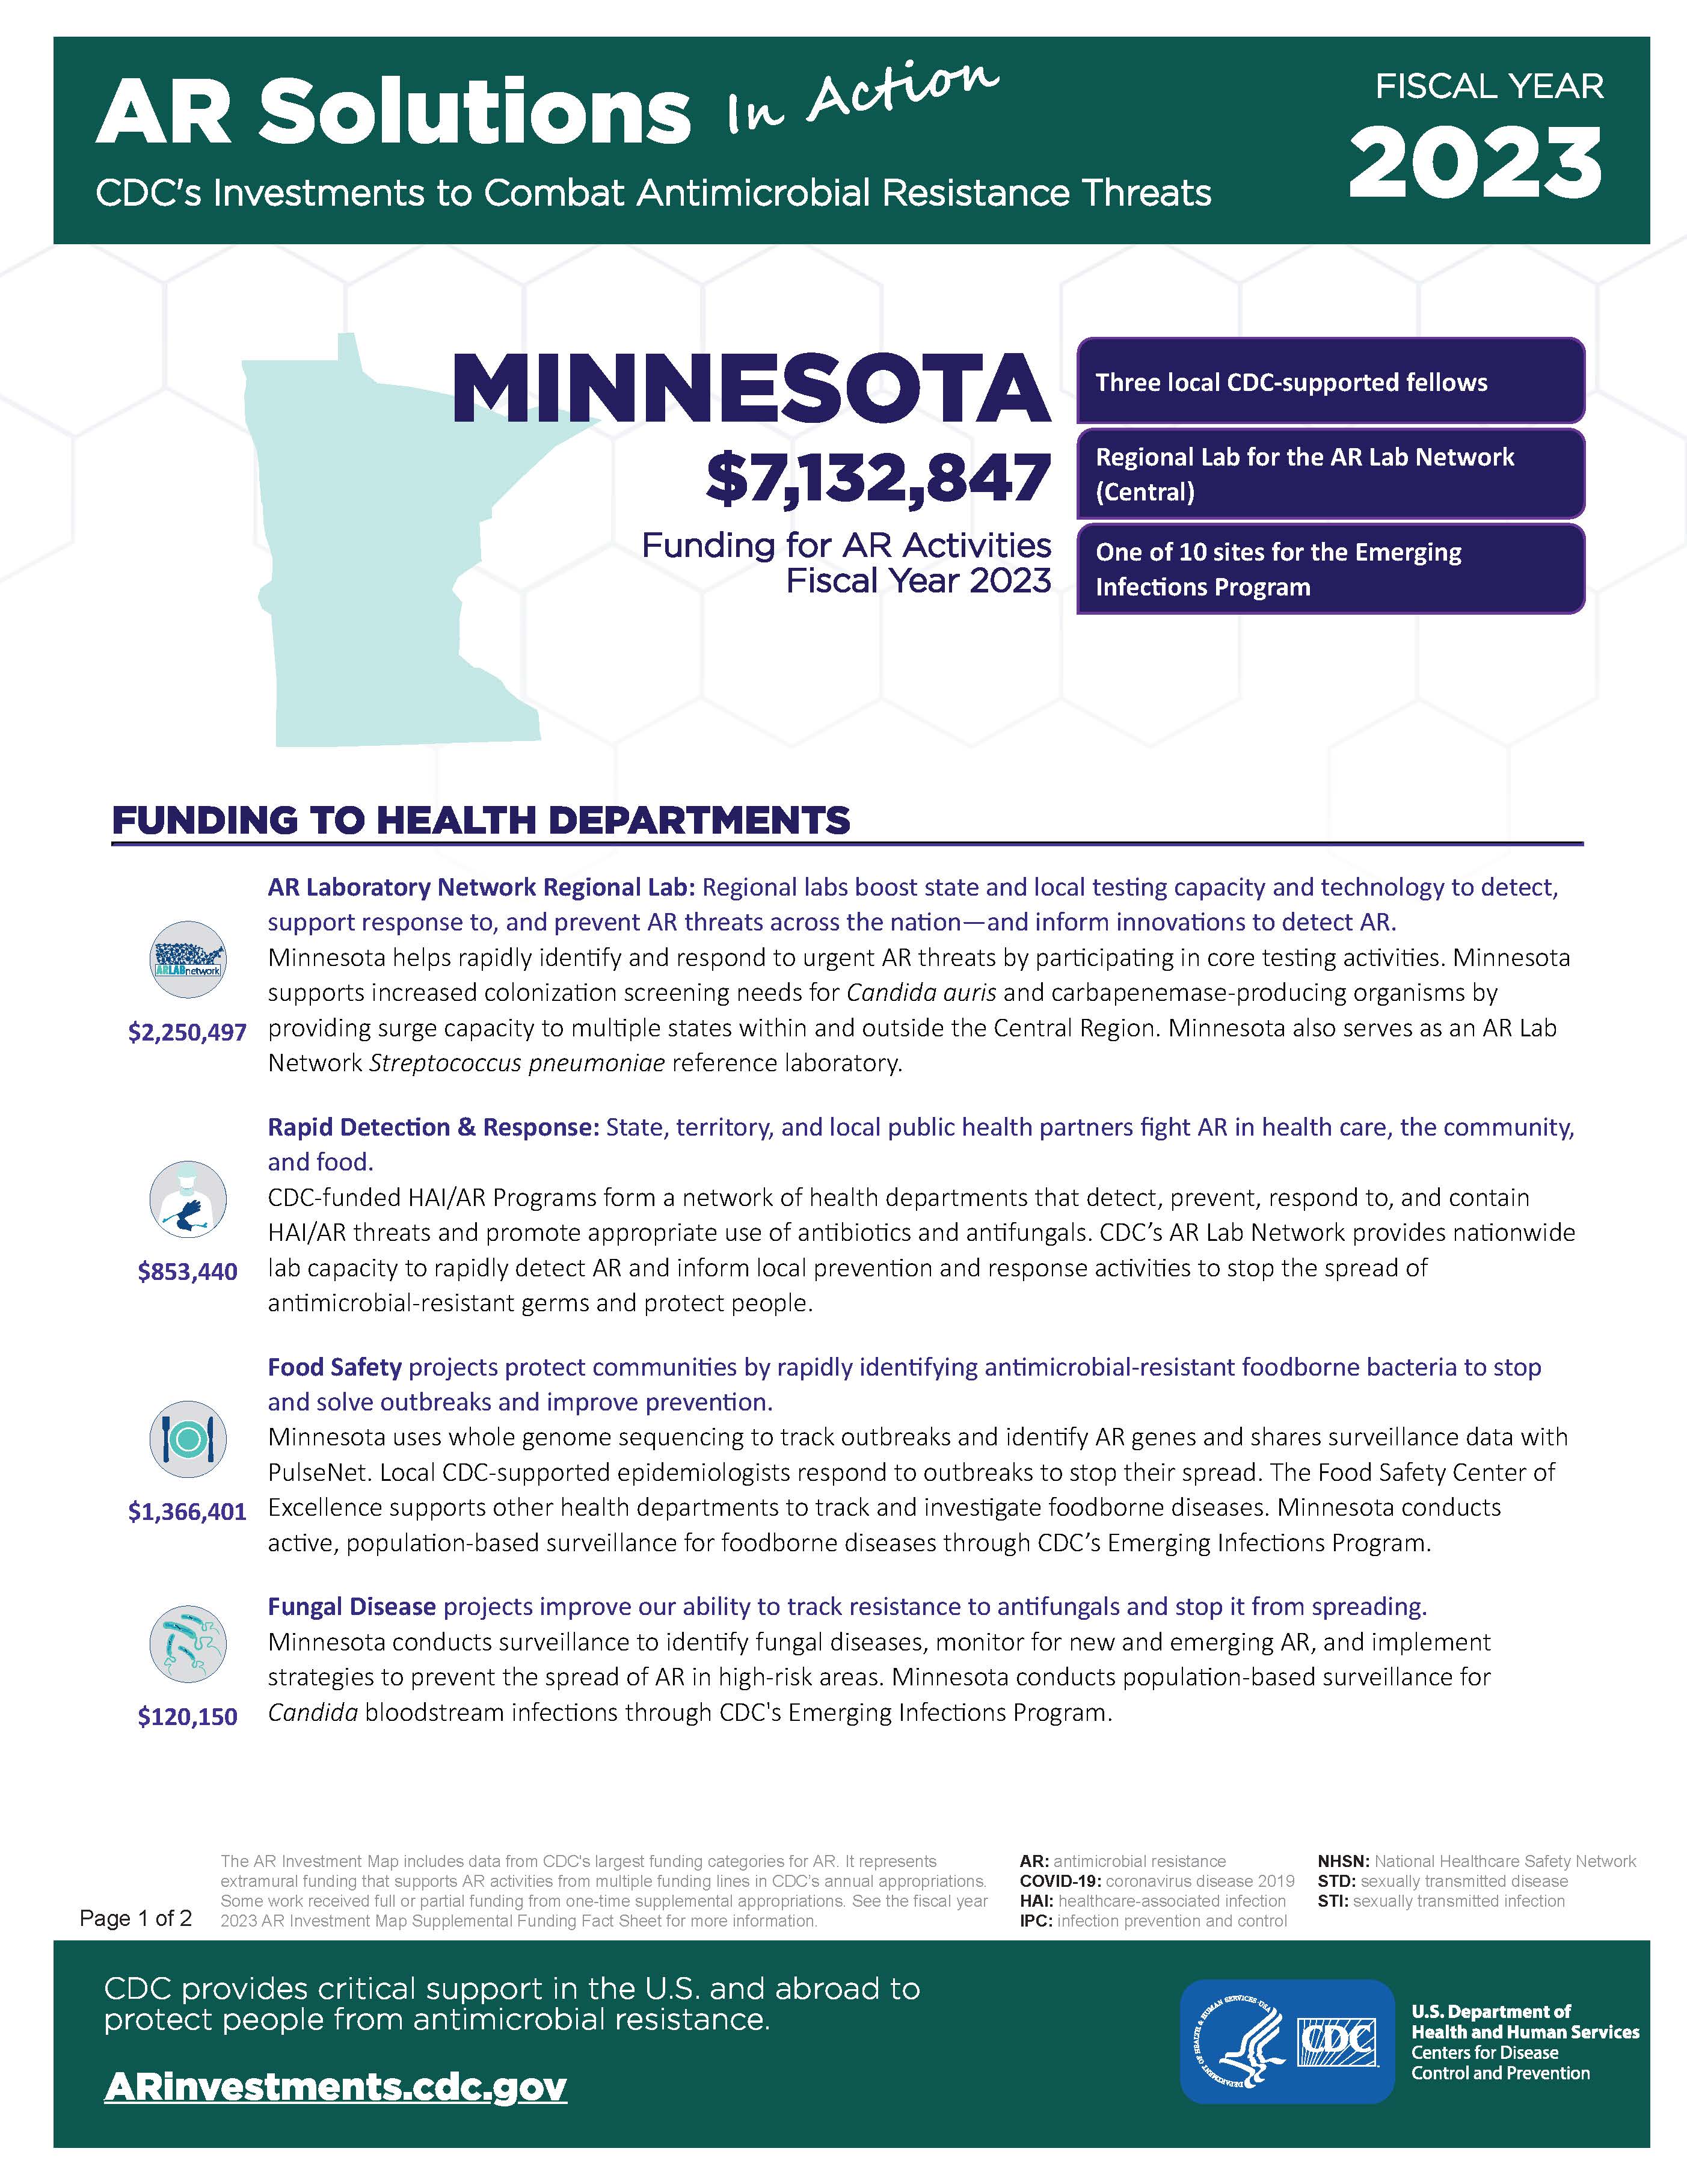 View Factsheet for Minnesota